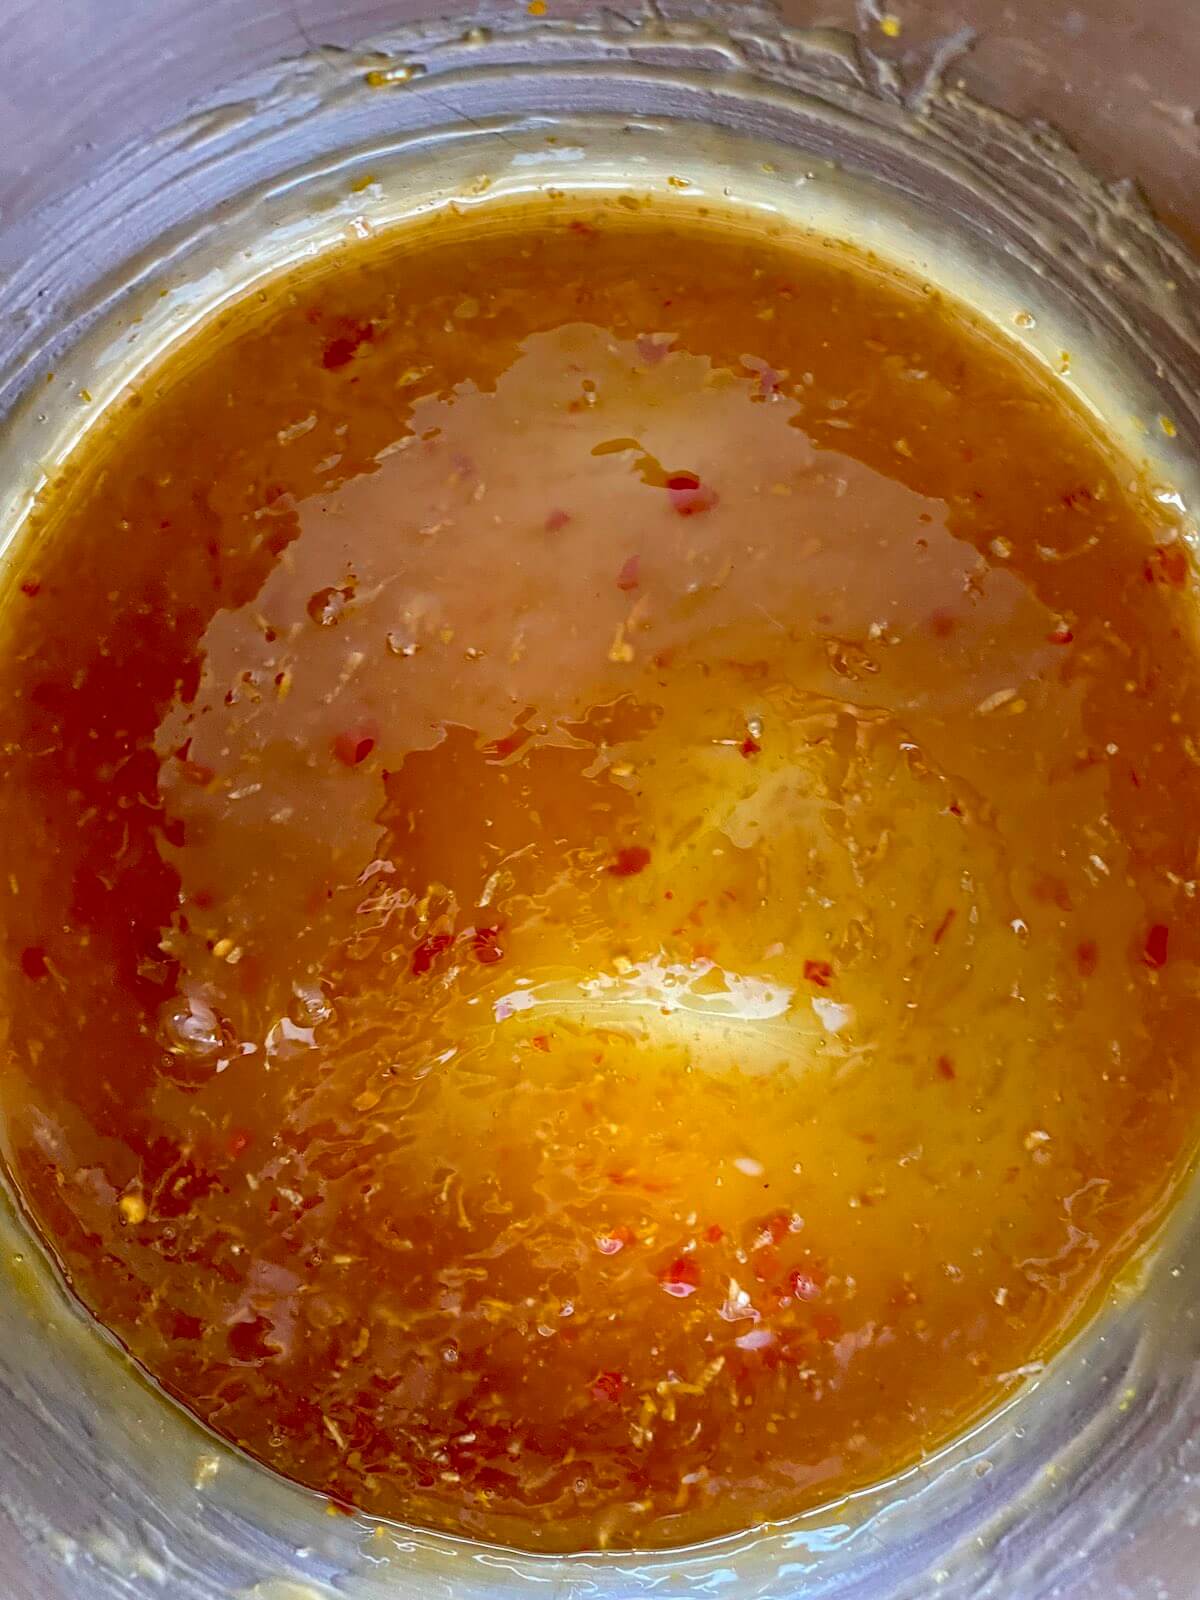 Orange sauce simmering in a saucepan.